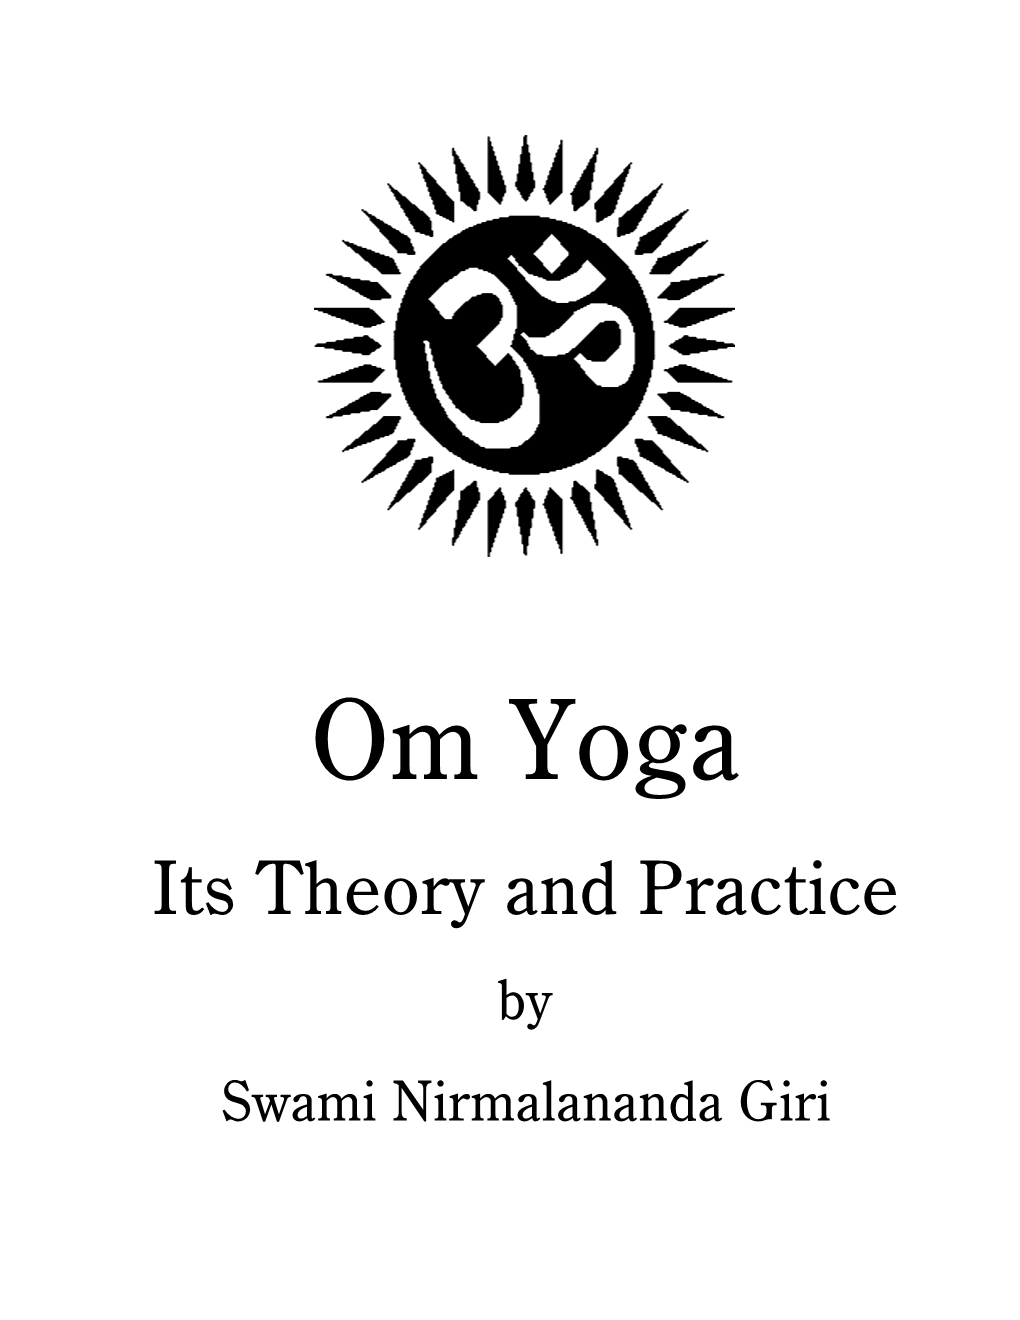 Its Theory and Practice by Swami Nirmalananda Giri ©Copyright 2006 by Atma Jyoti Press